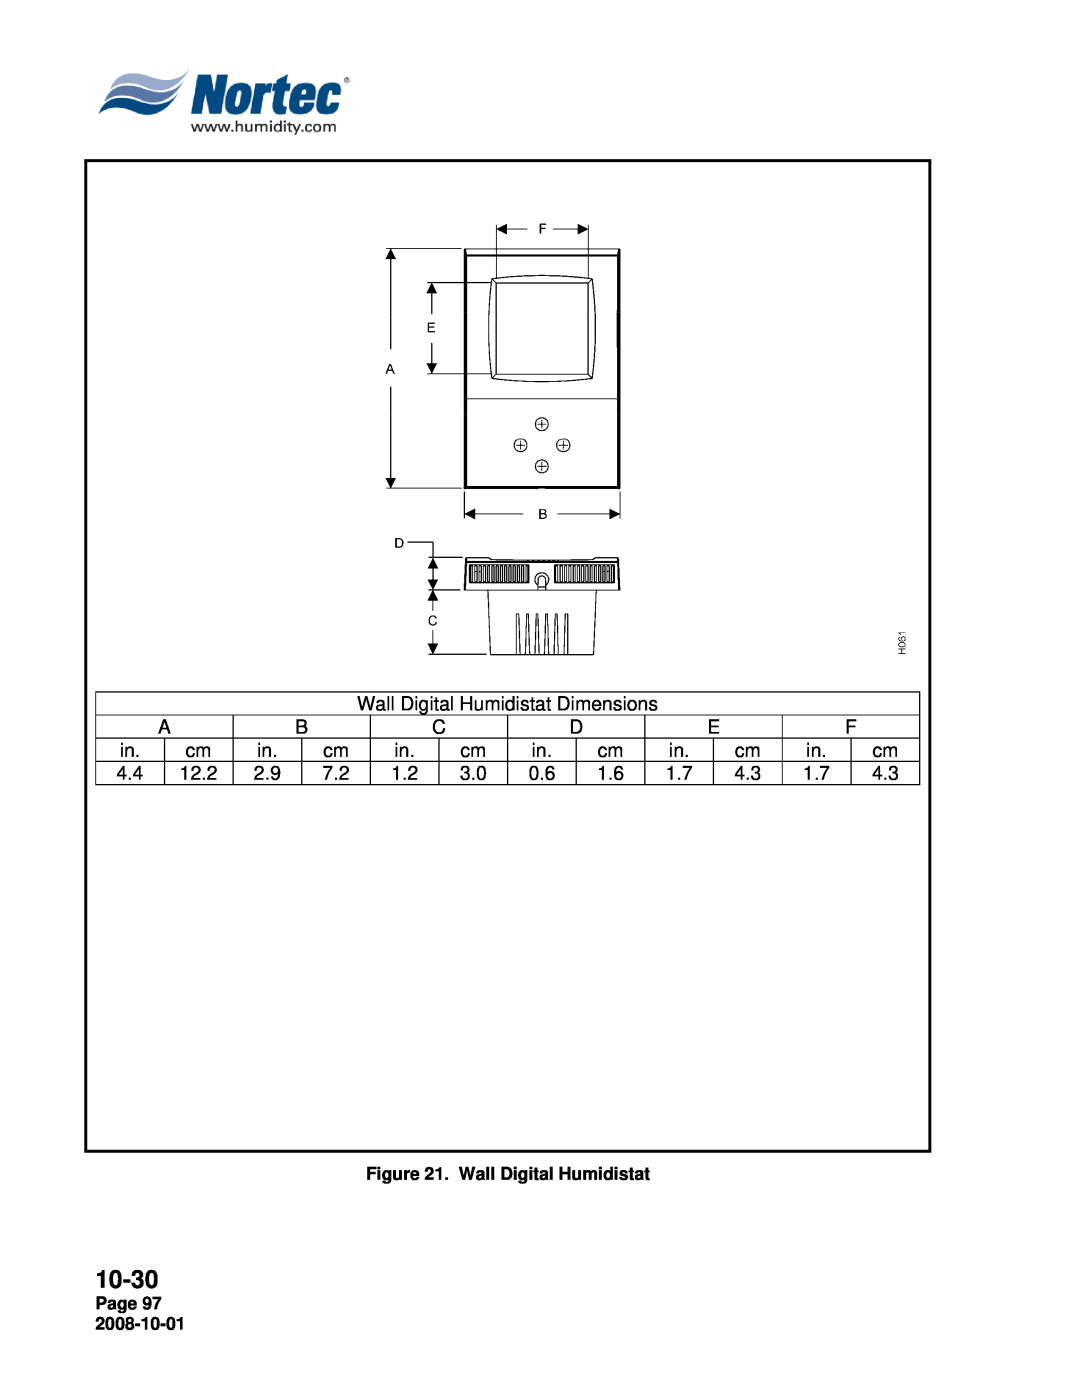 Nortec NHTC, NHPC manual 10-30, Wall Digital Humidistat Dimensions 